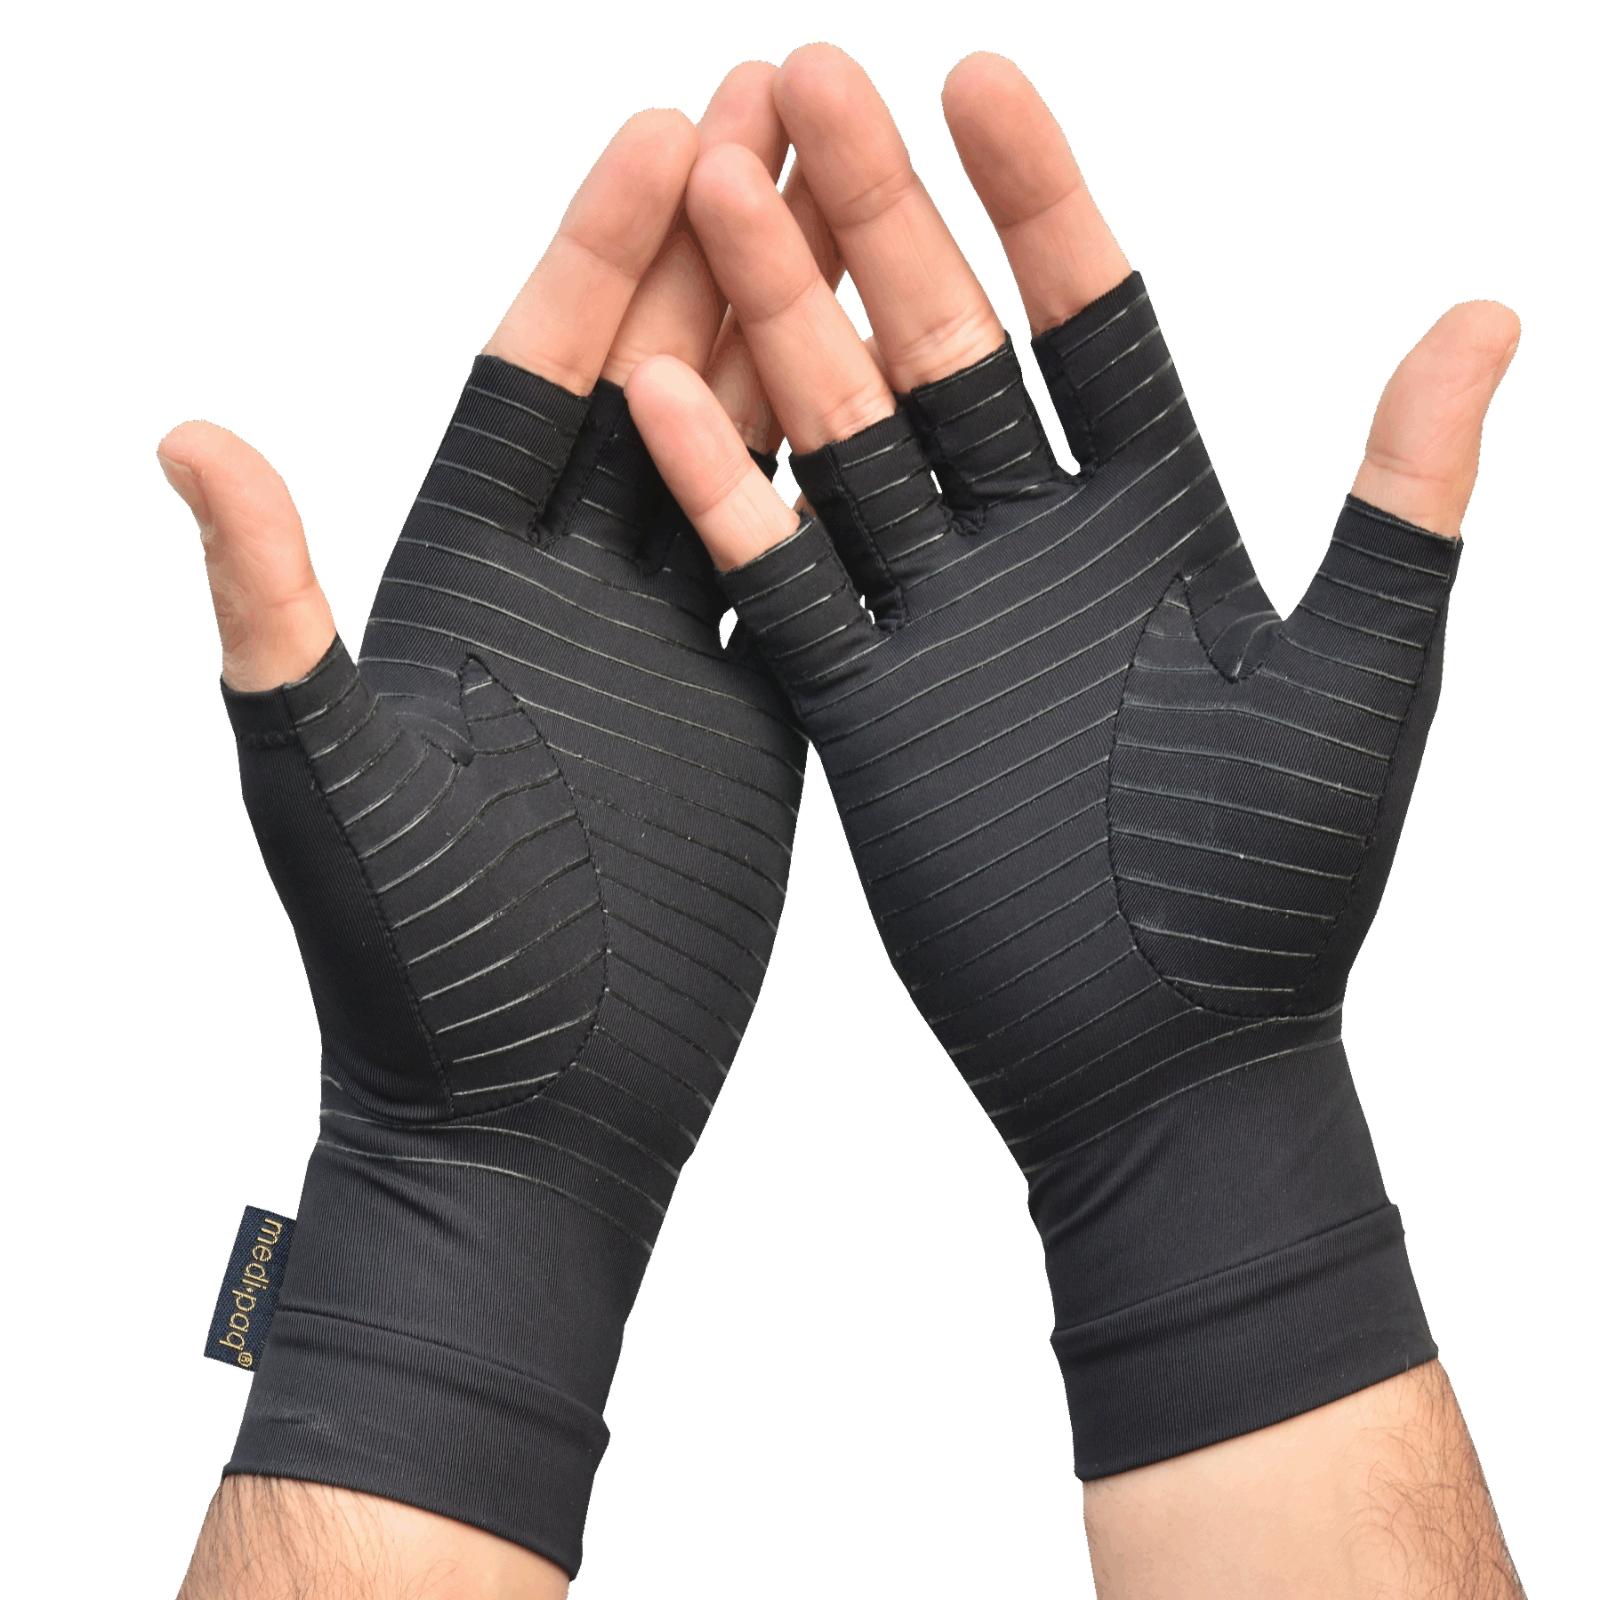 Copper Compression Arthritis Gloves Hand Support ...